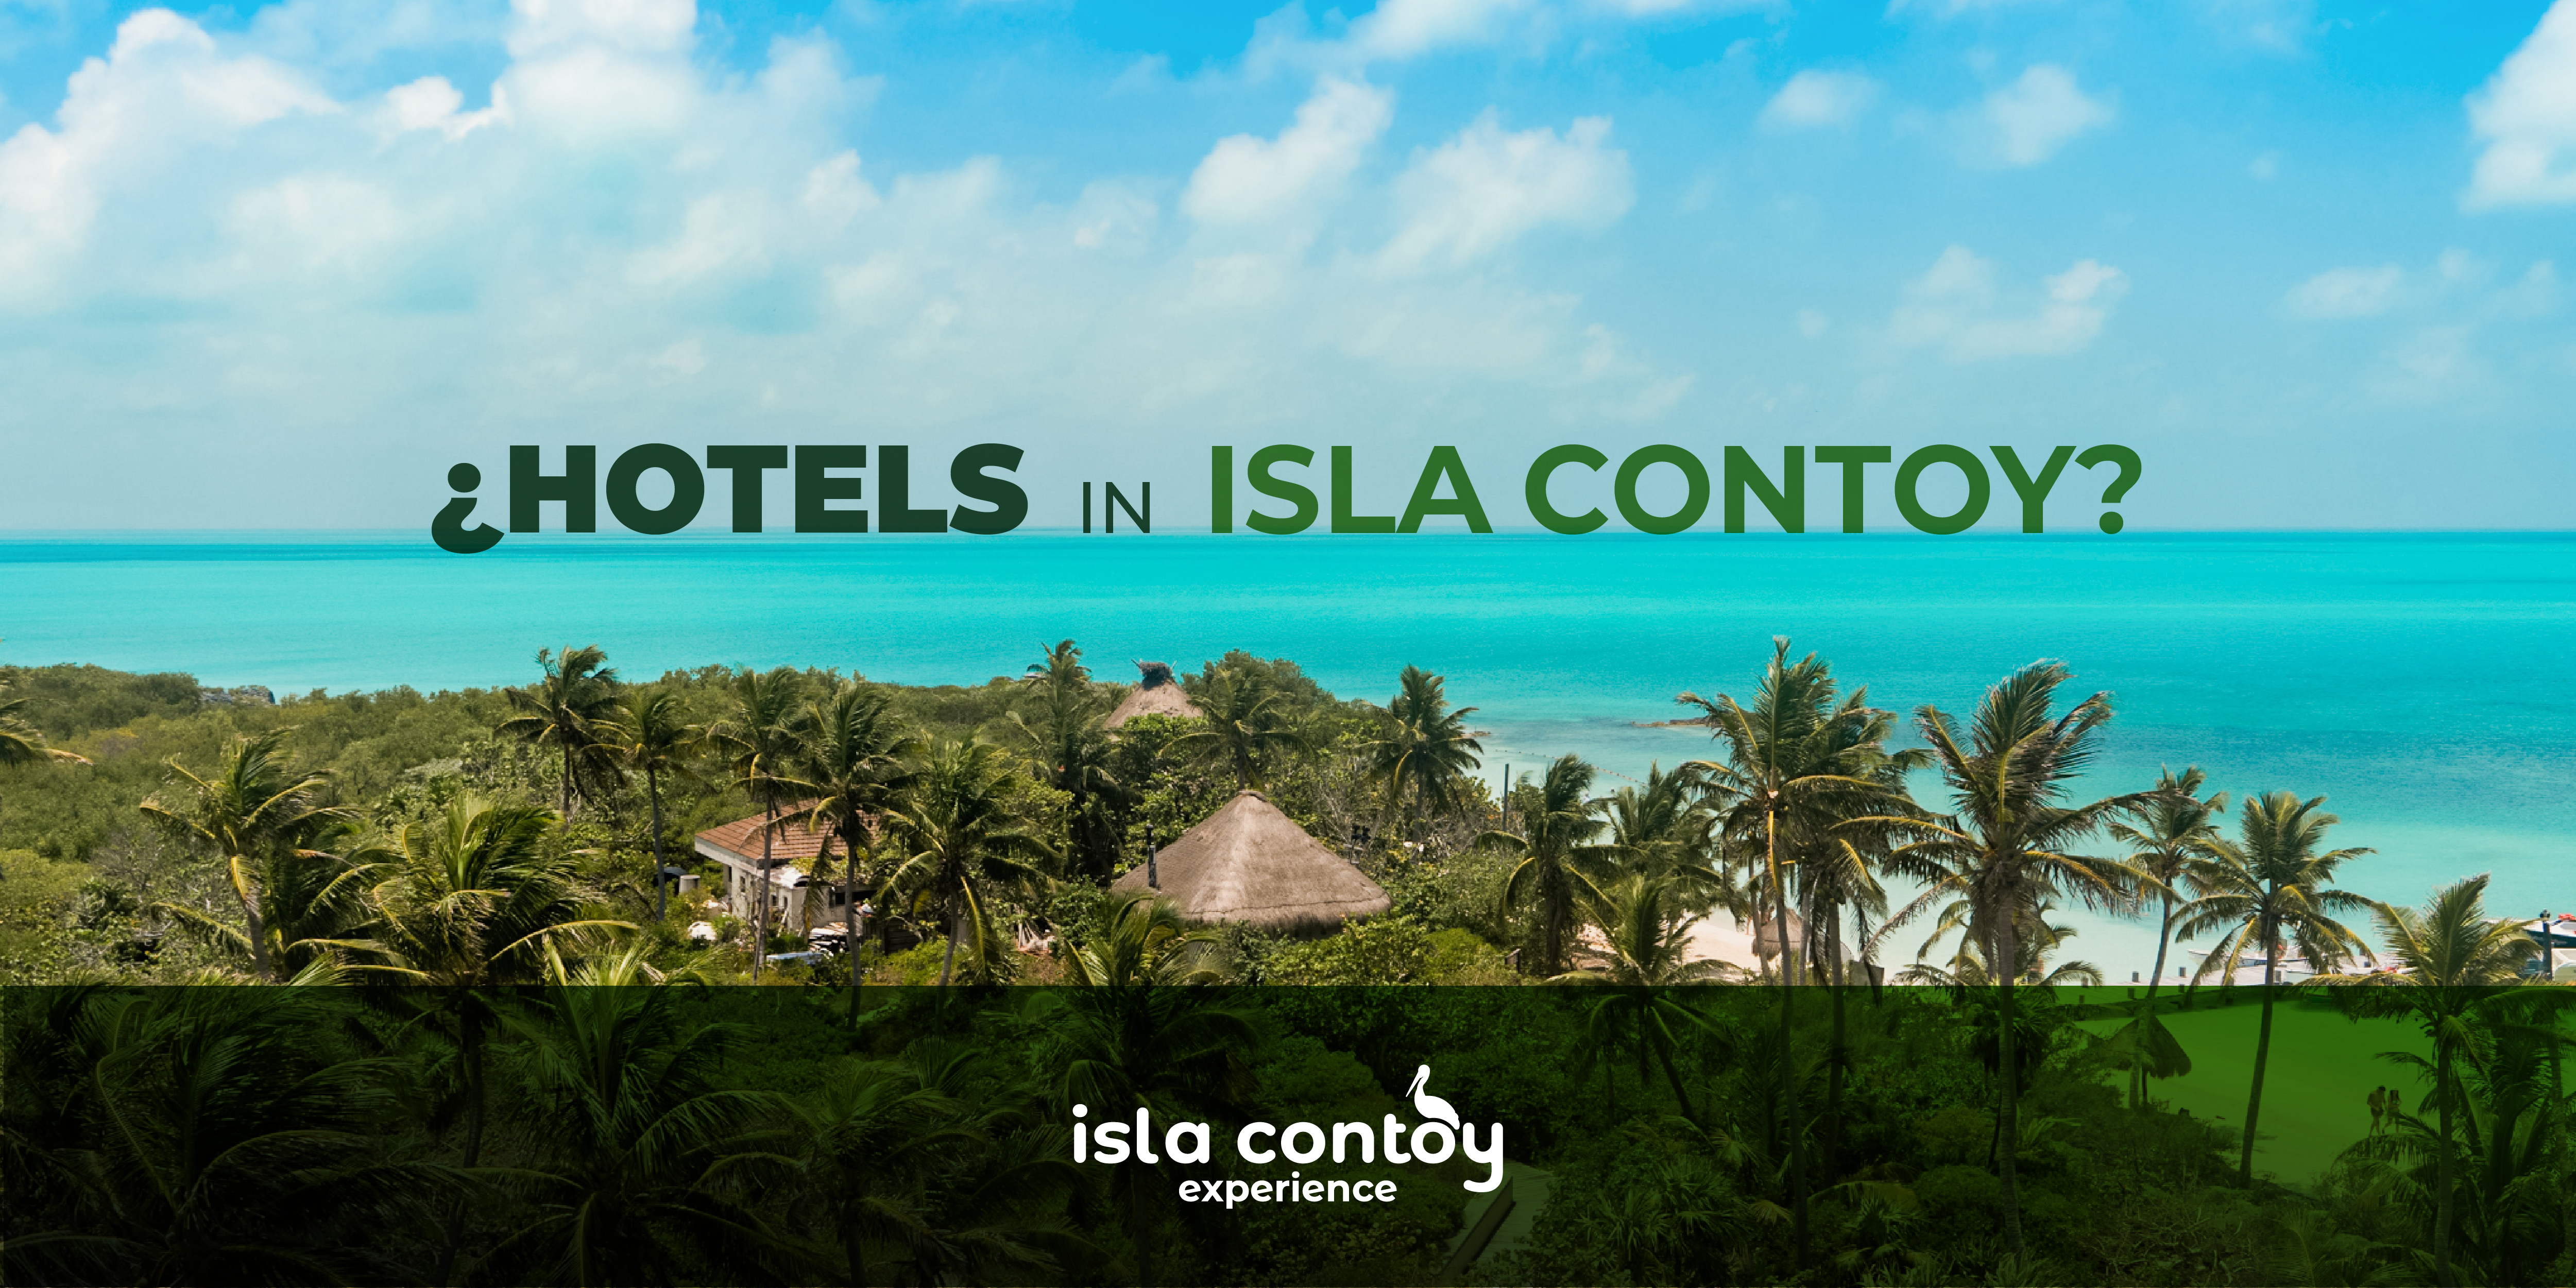 Hoteles in Isla Contoy